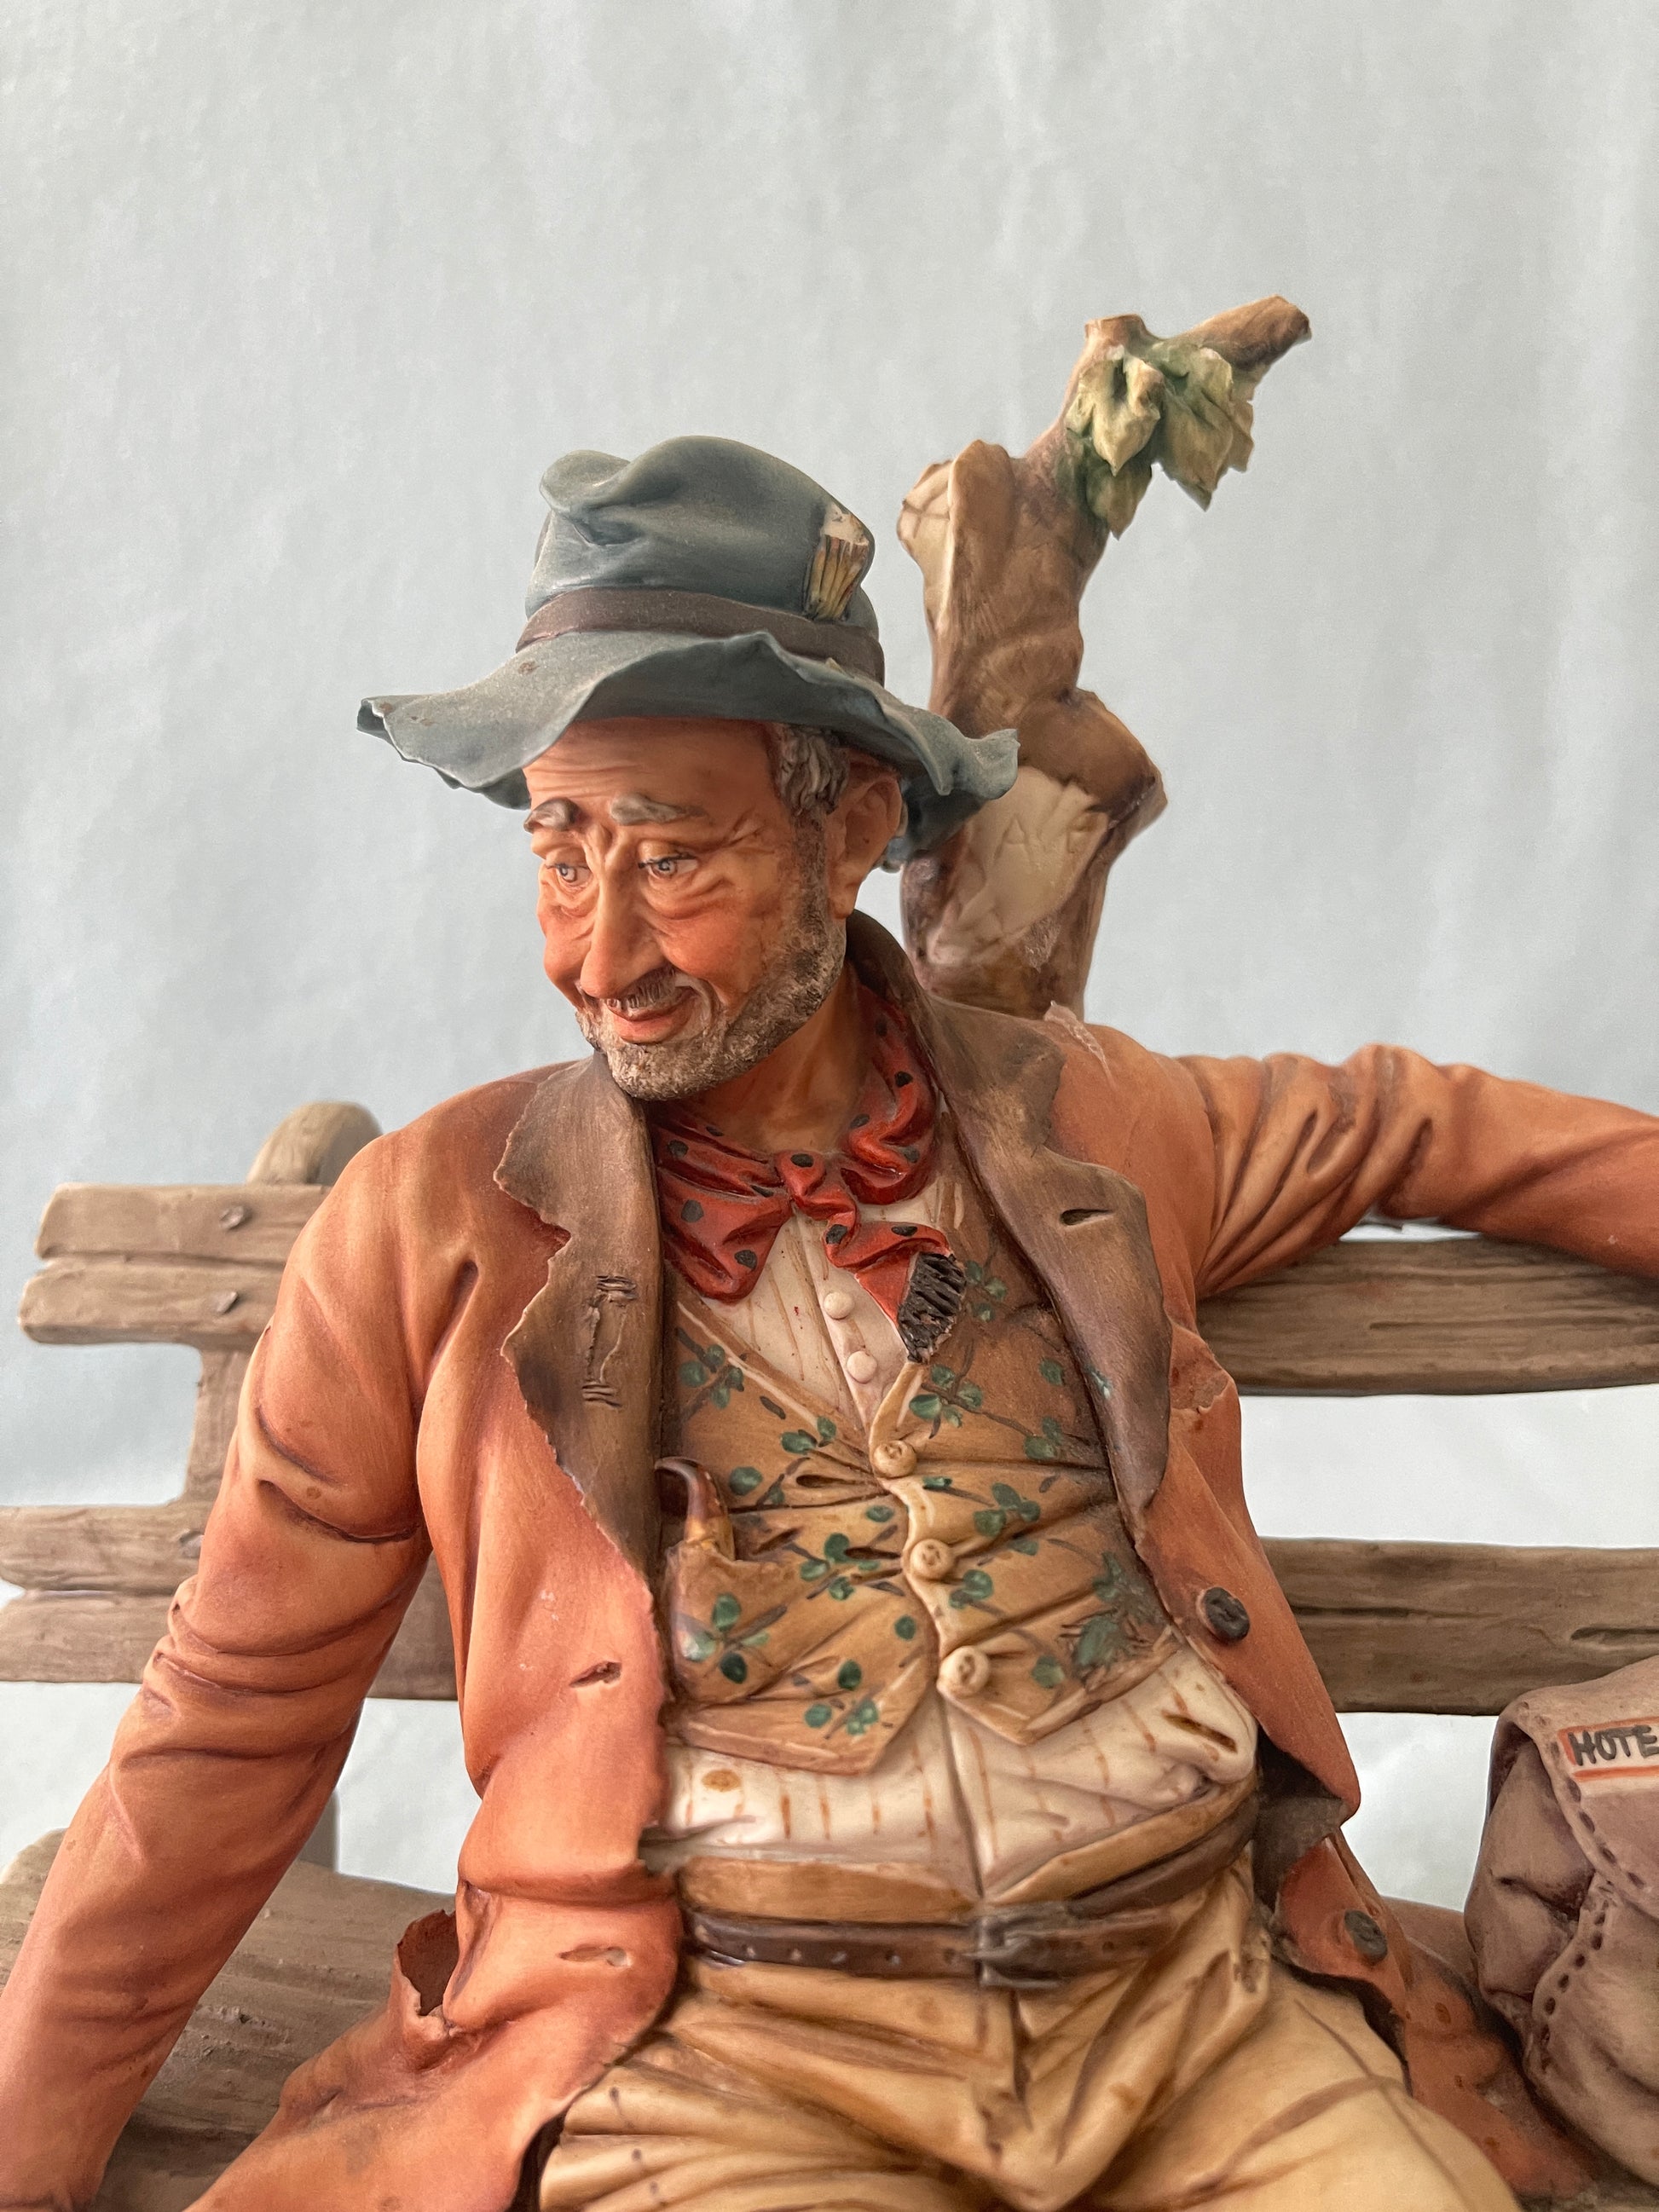 Capodimonte Tramp on Bench Figurine by Volta